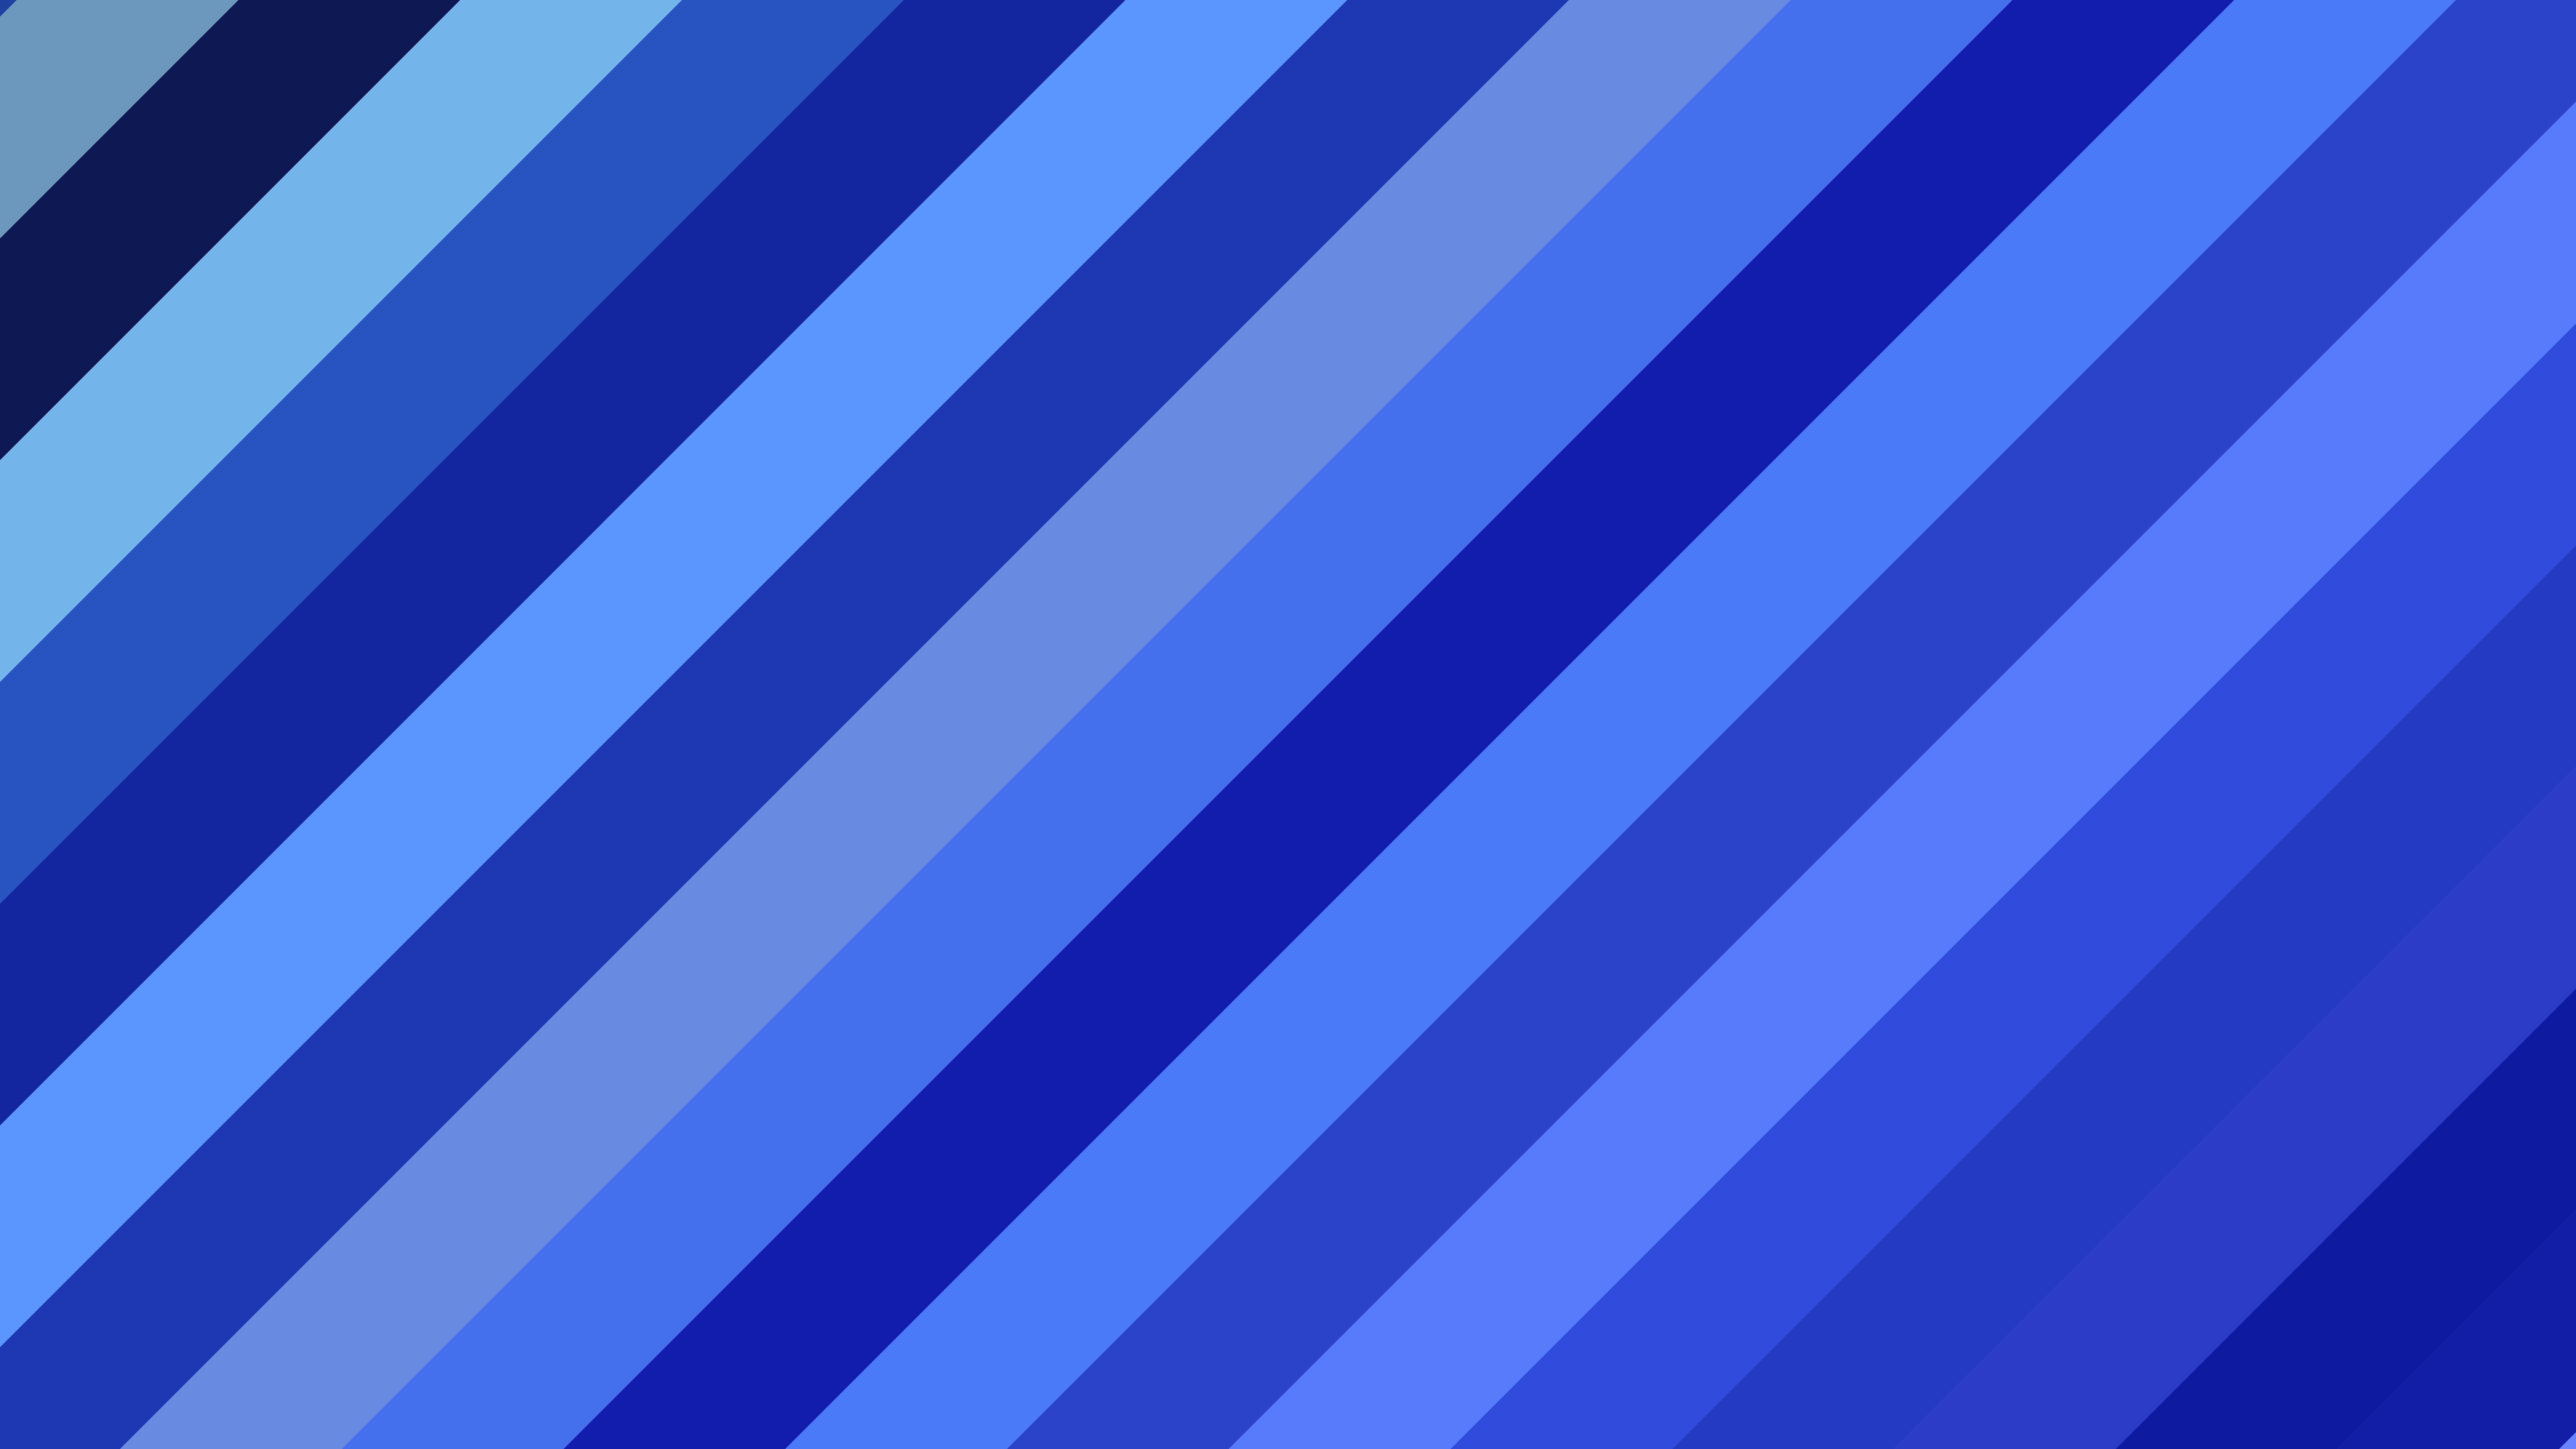 Blue Diagonal Striped Background